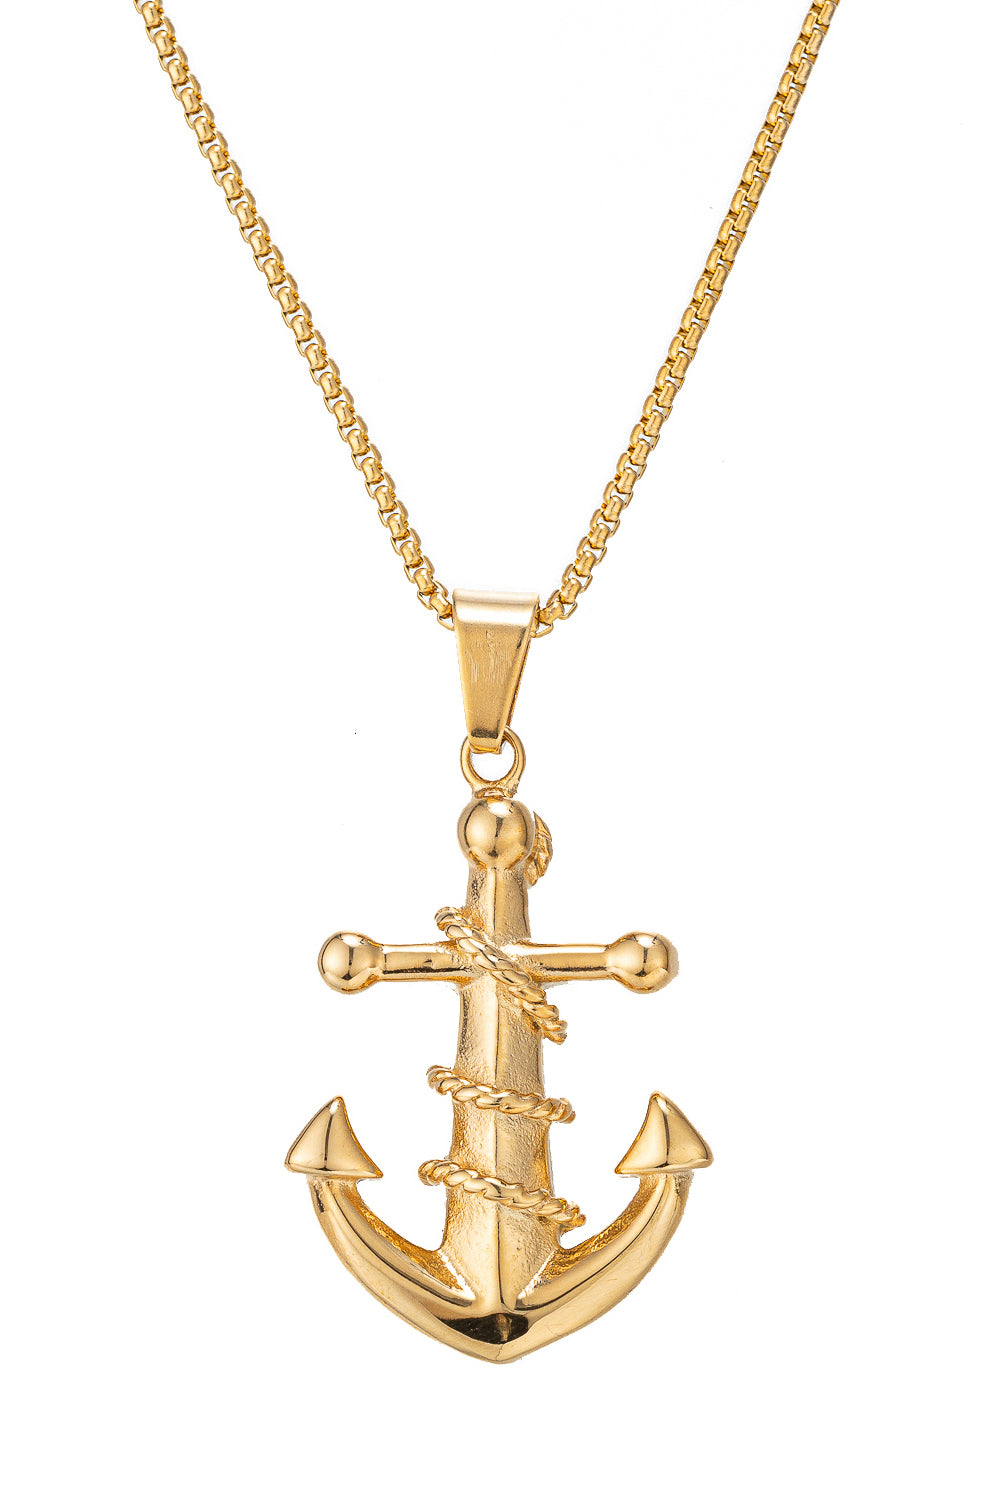 Gold tone titanium anchor pendant necklace.